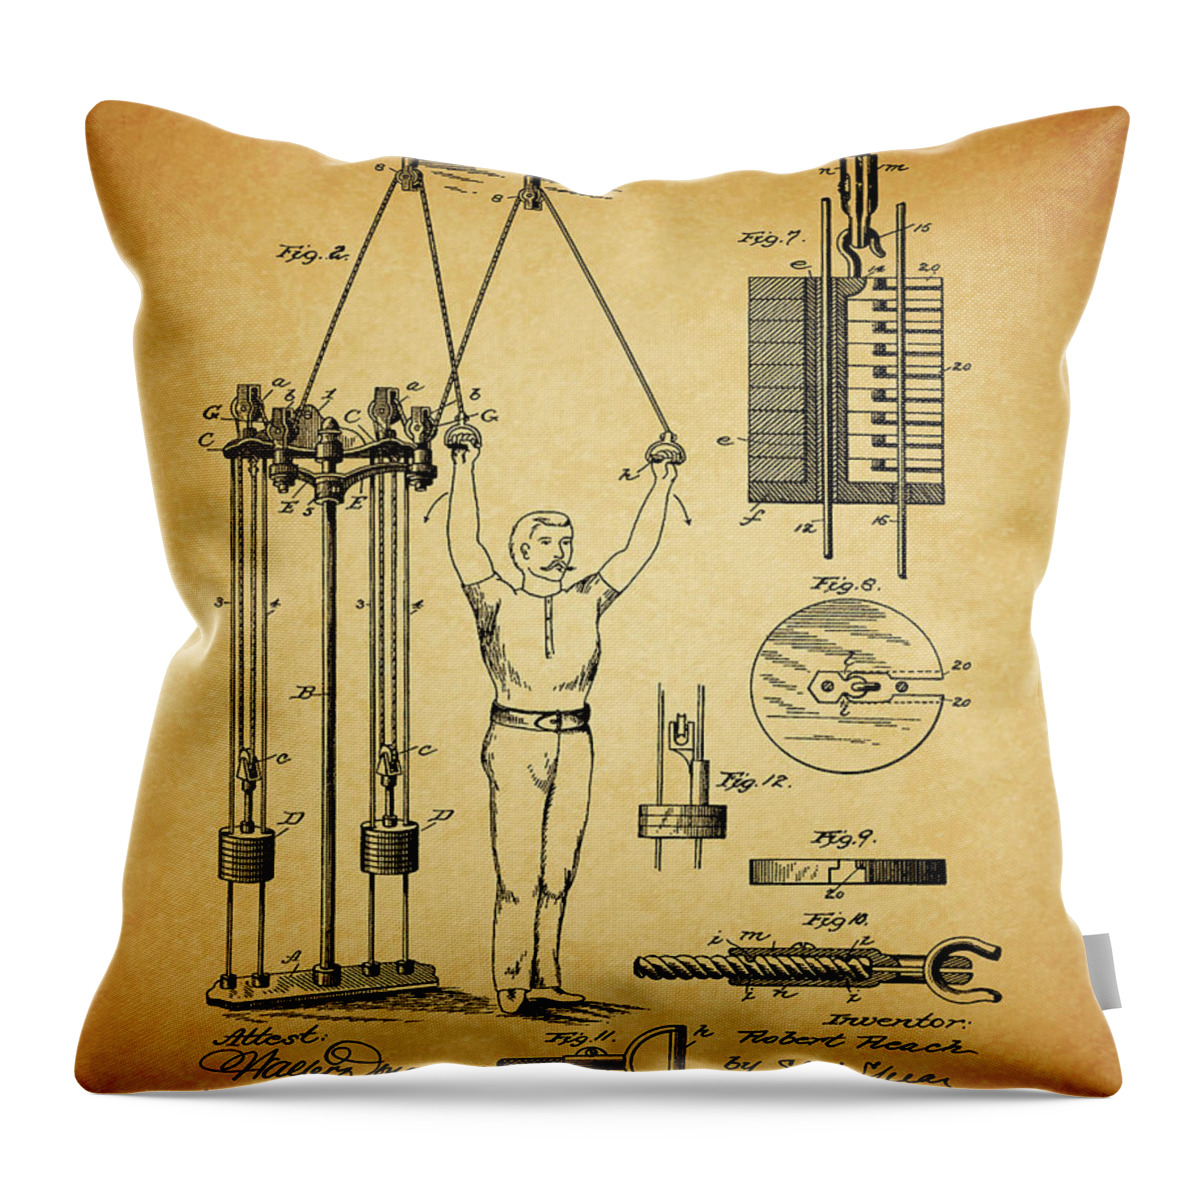 1887 Exercising Machine Patent Throw Pillow featuring the drawing 1887 Exercising Machine Patent by Dan Sproul